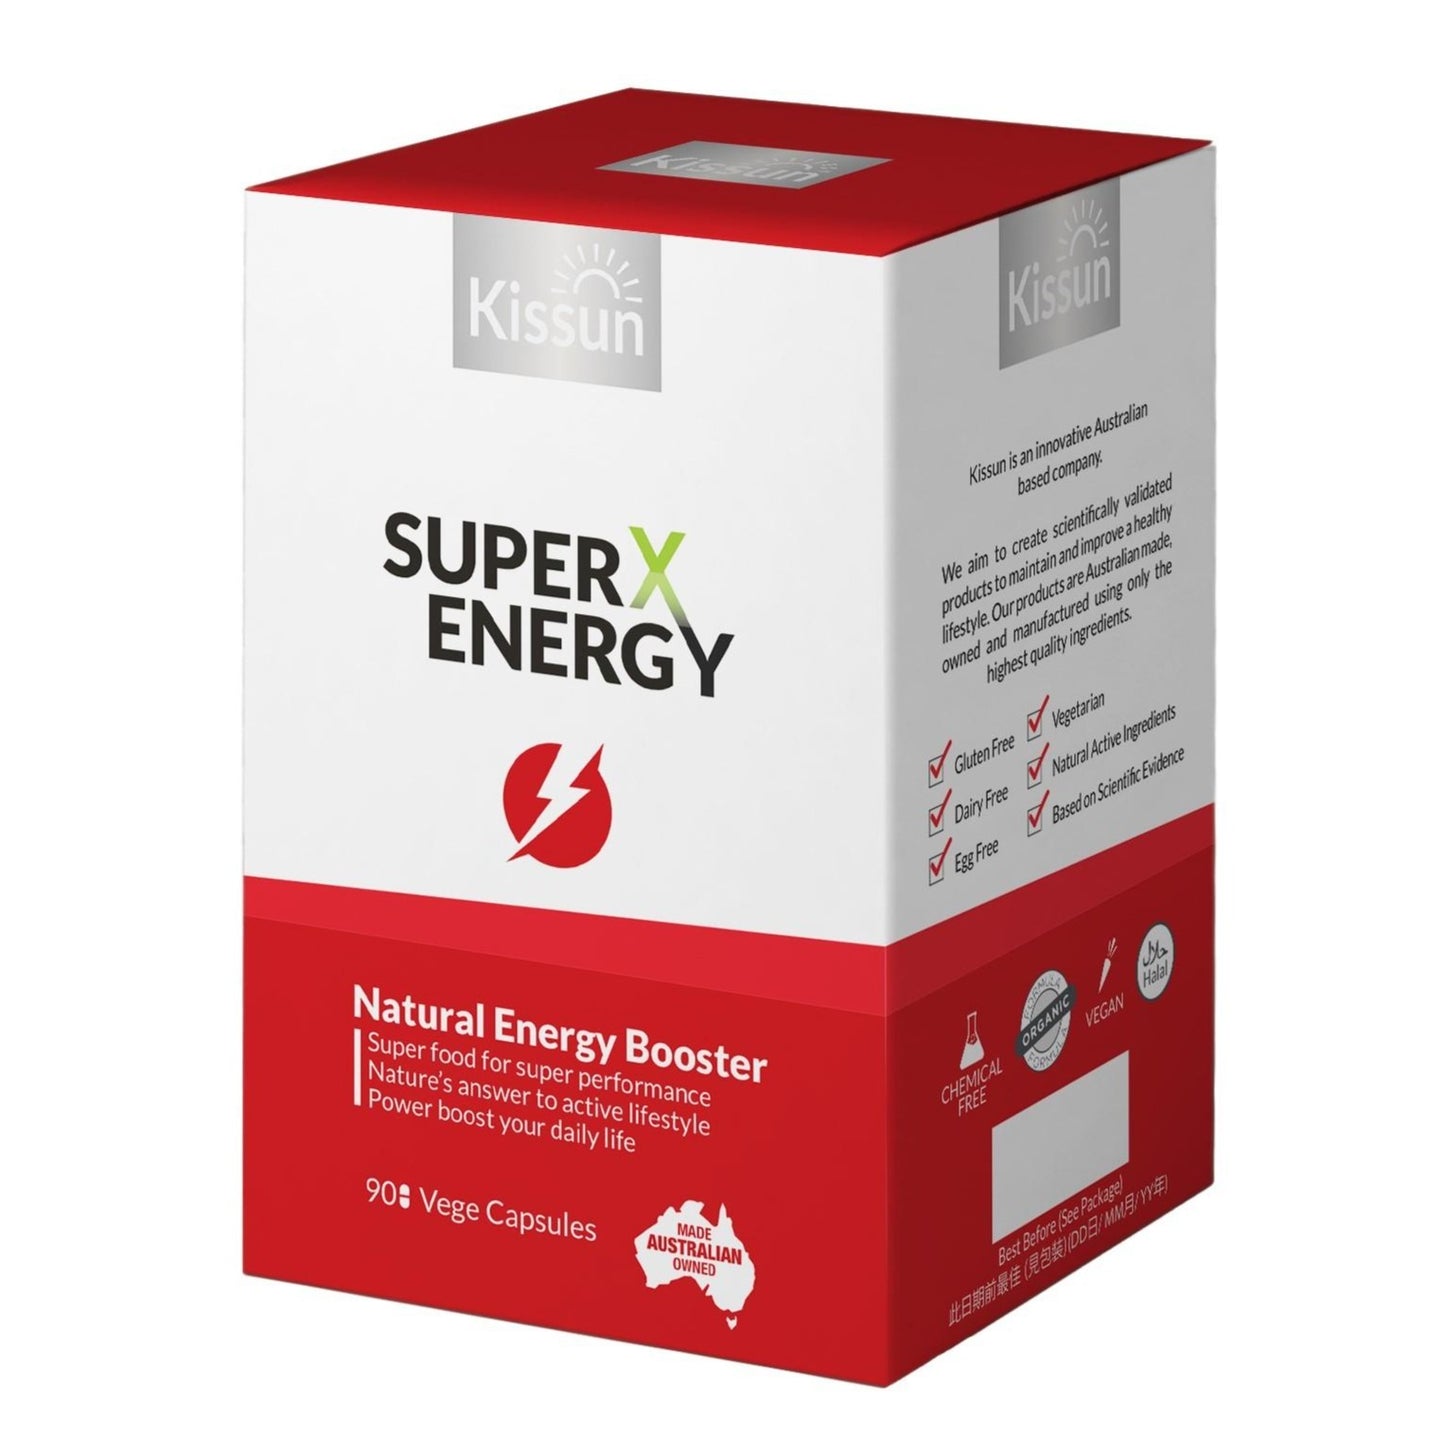 Kissun Super X Energy